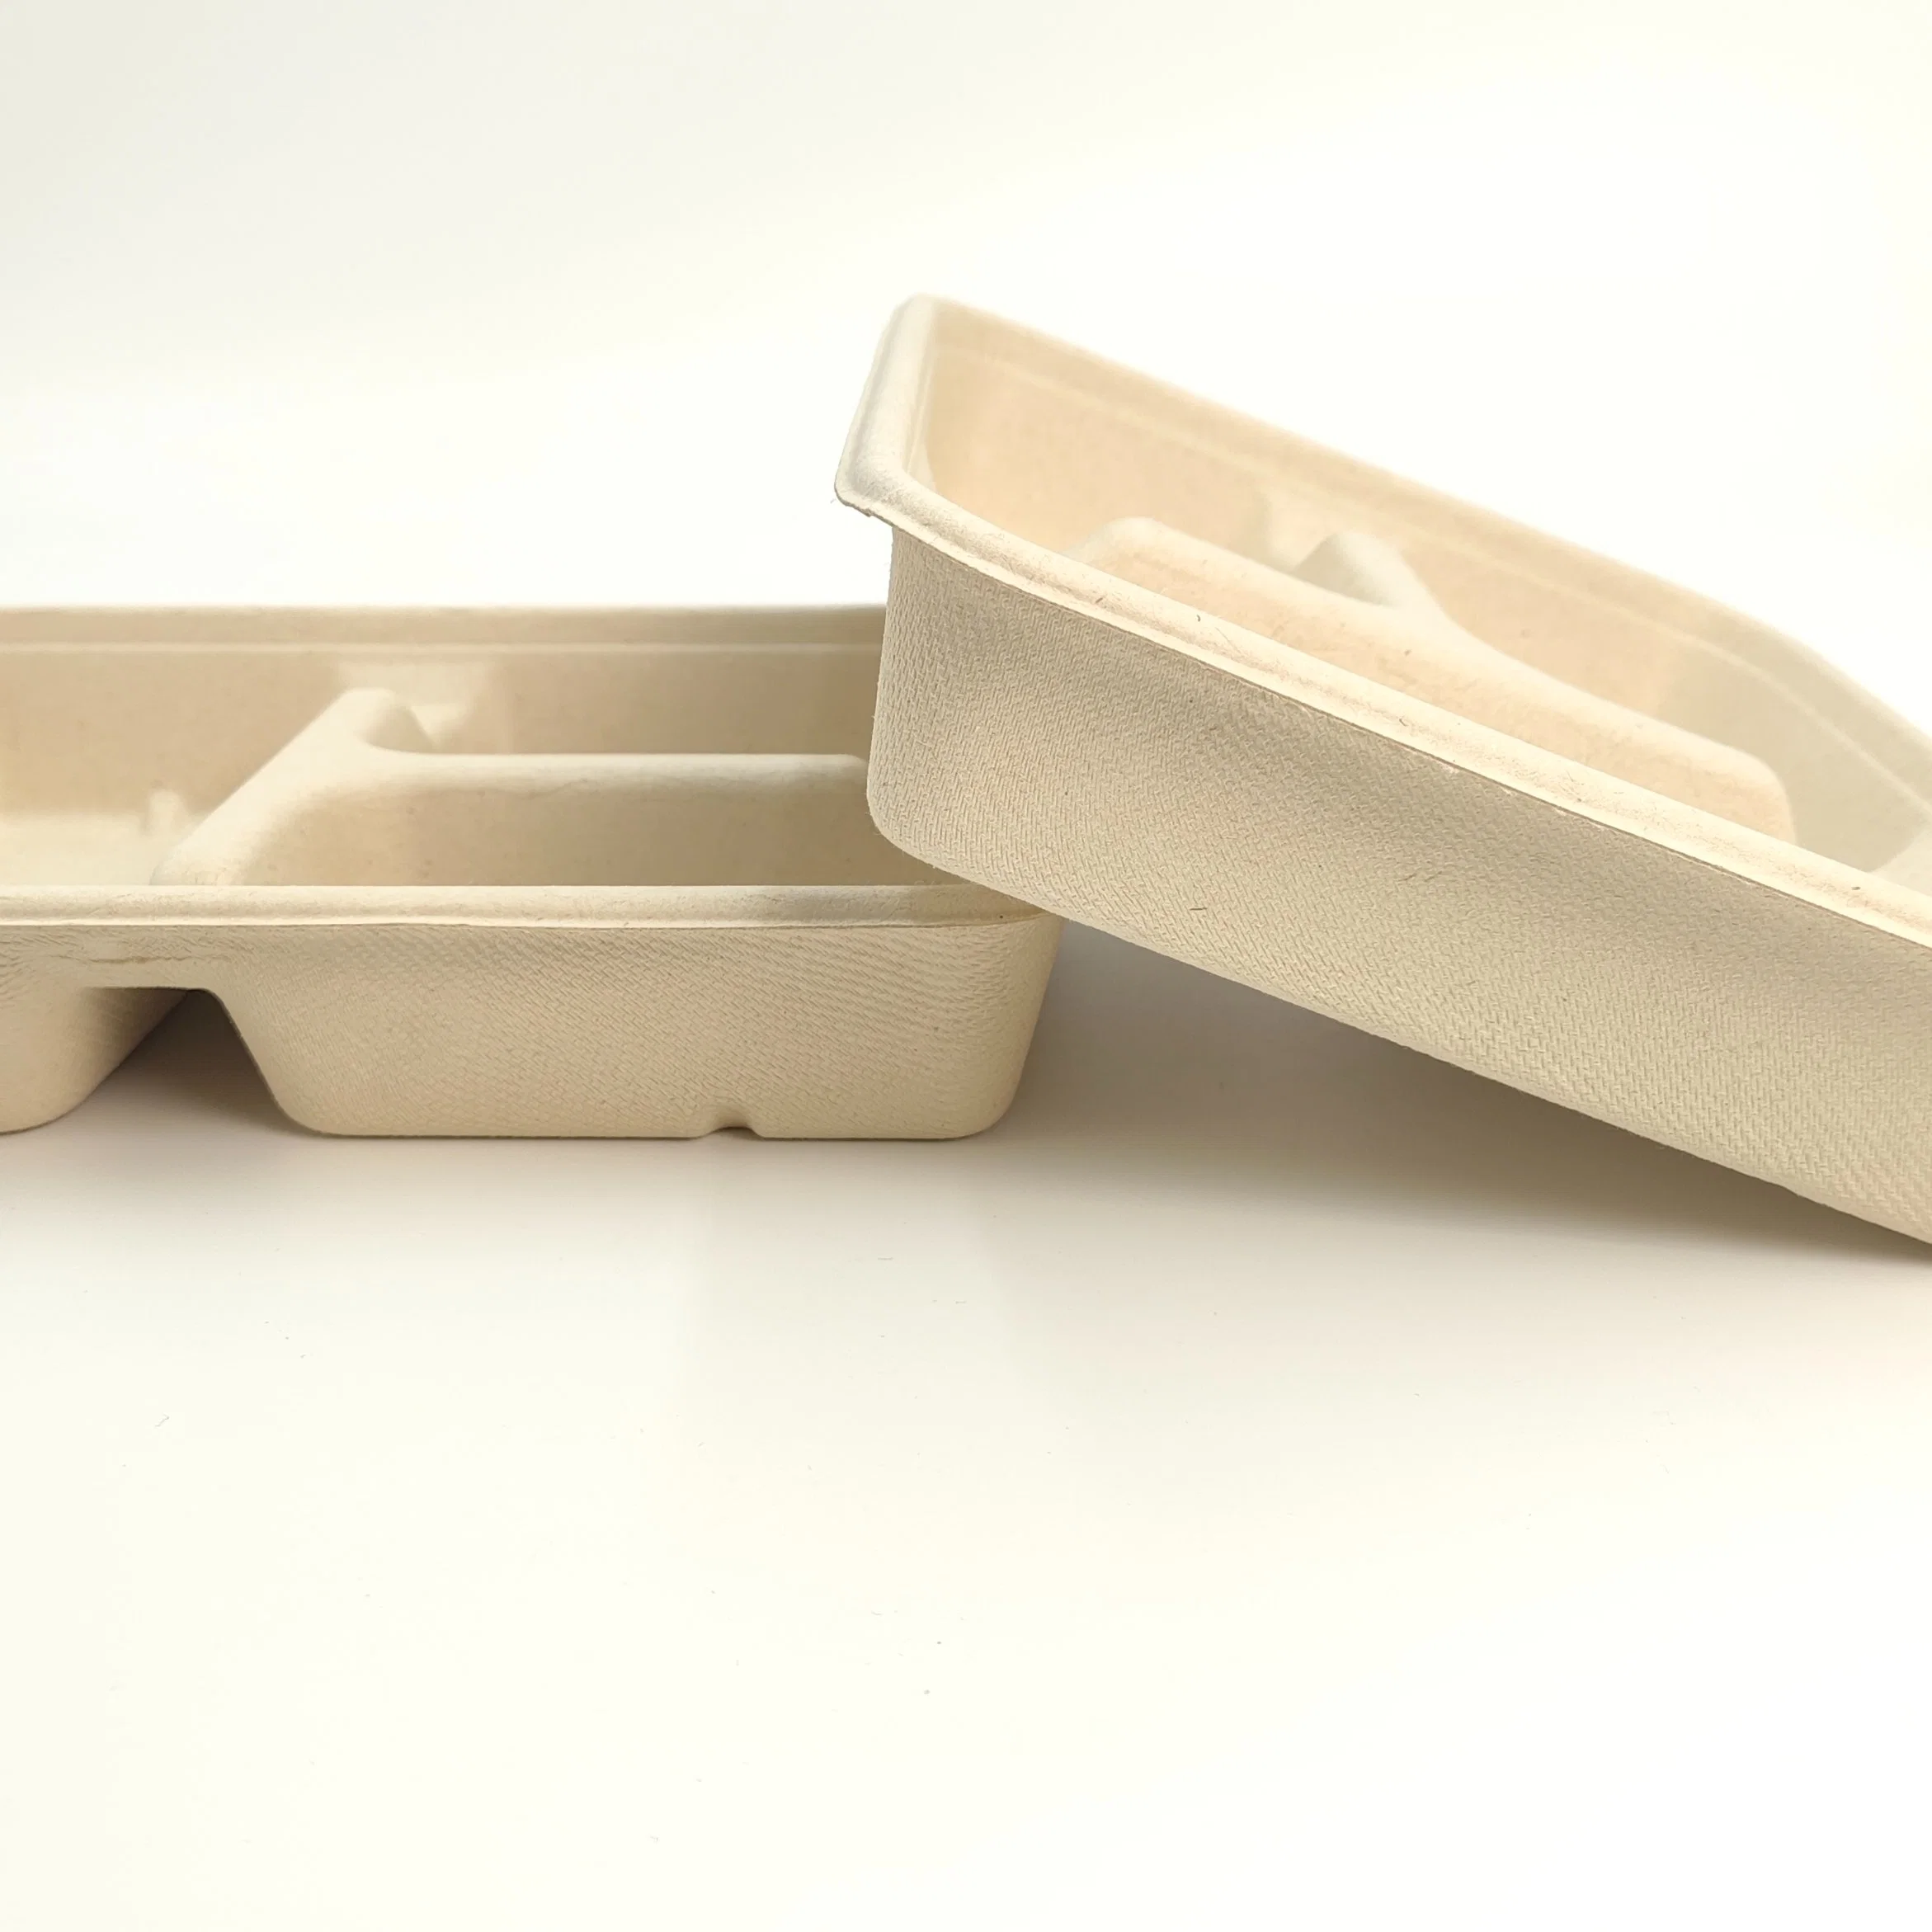 Caja de hamburguesa biodegradable desechable Bento Lunch Box Cake Food Containers Caja de aperitivos con compartimento para la protección de postres